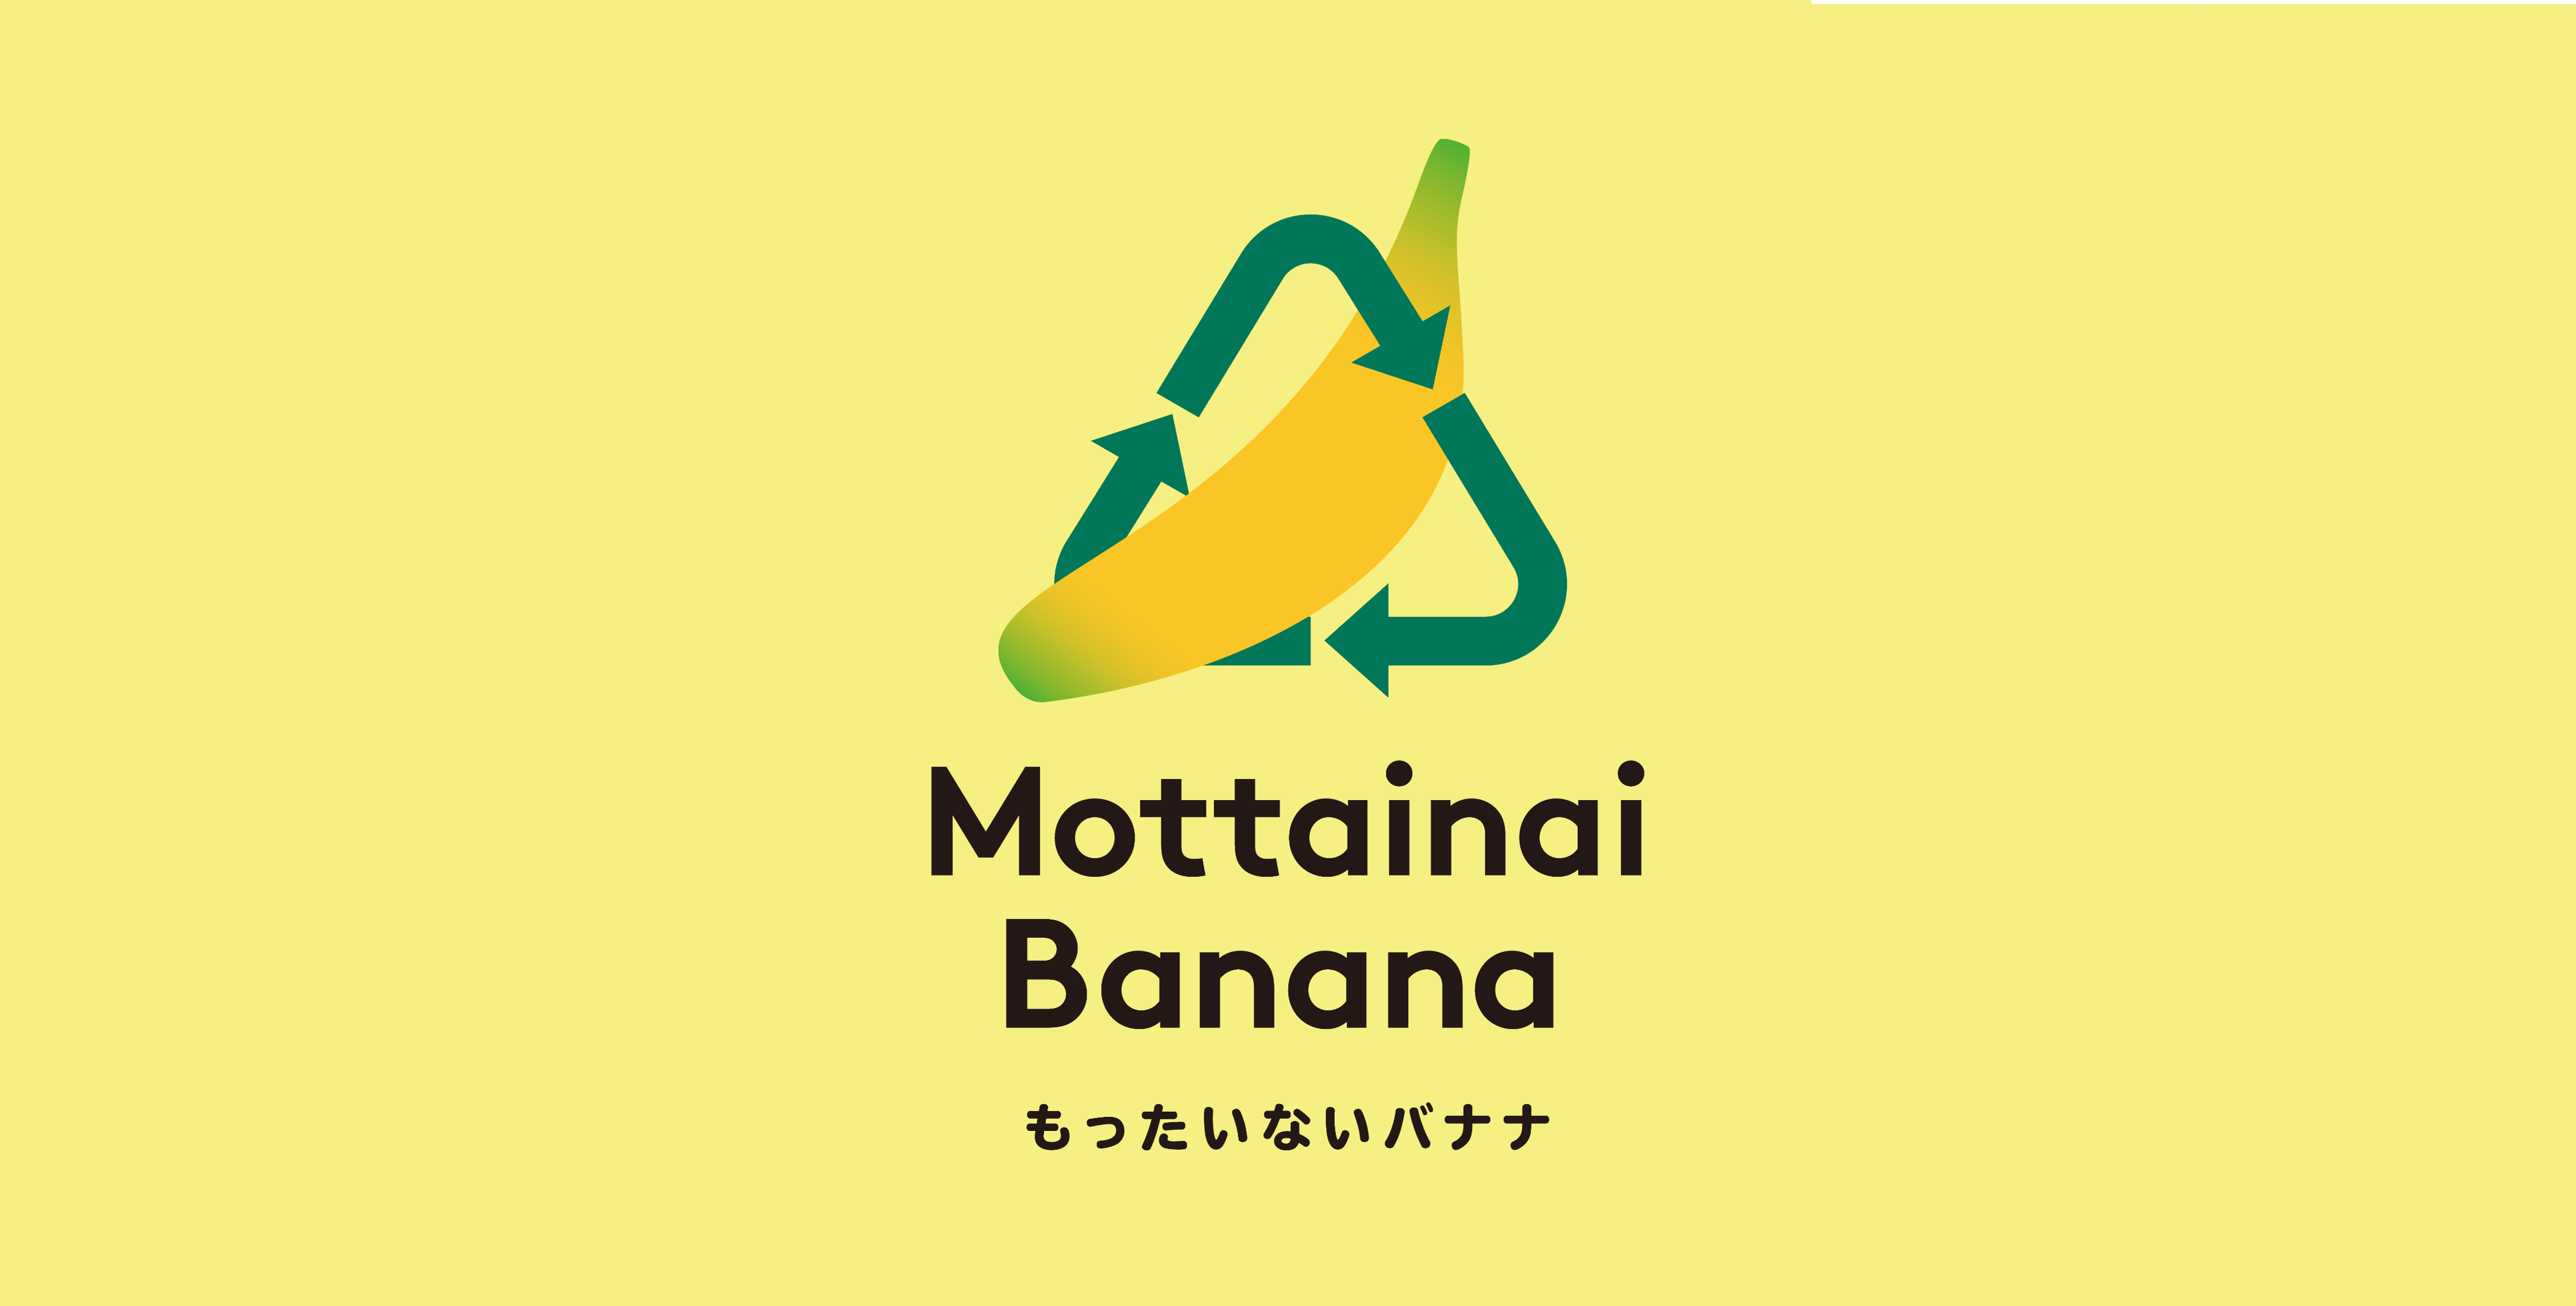 dole_banana1